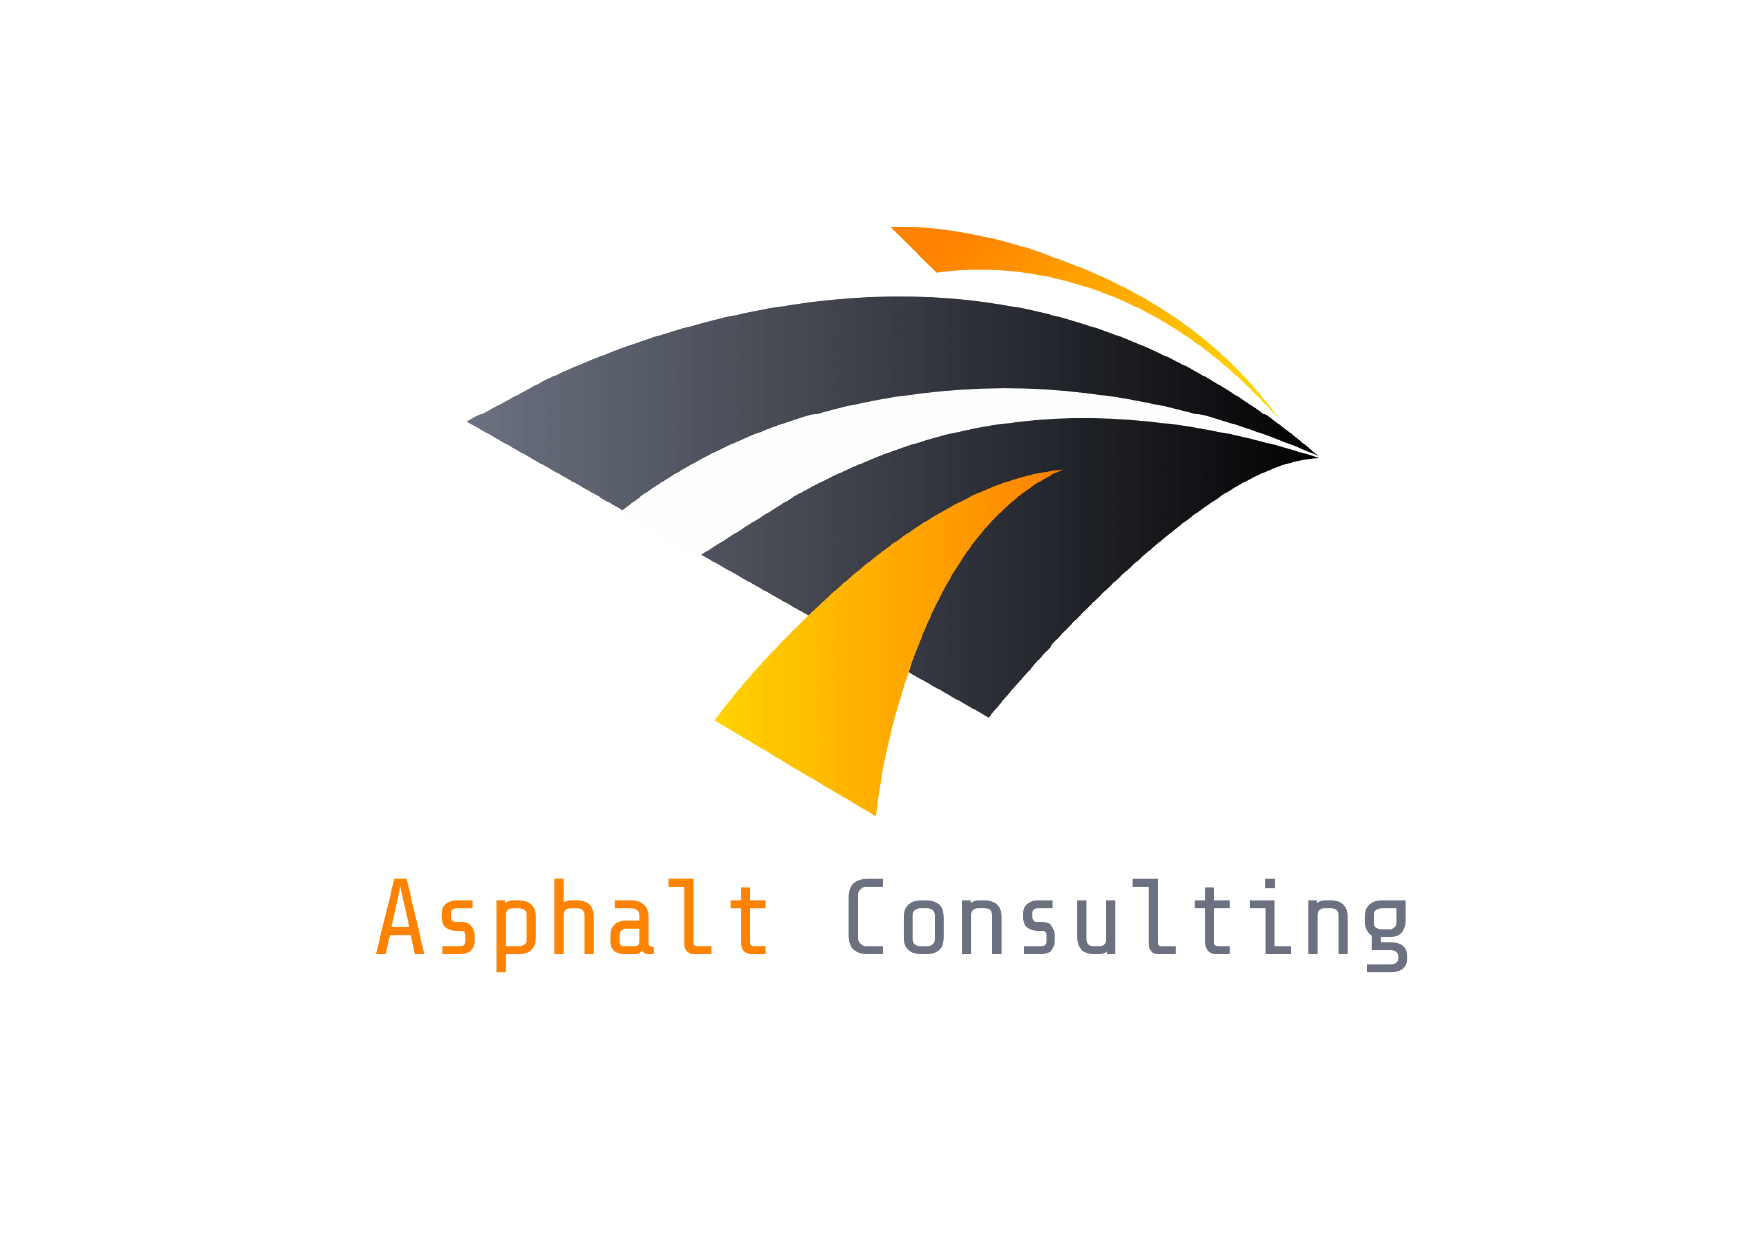 Asphalt Consulting